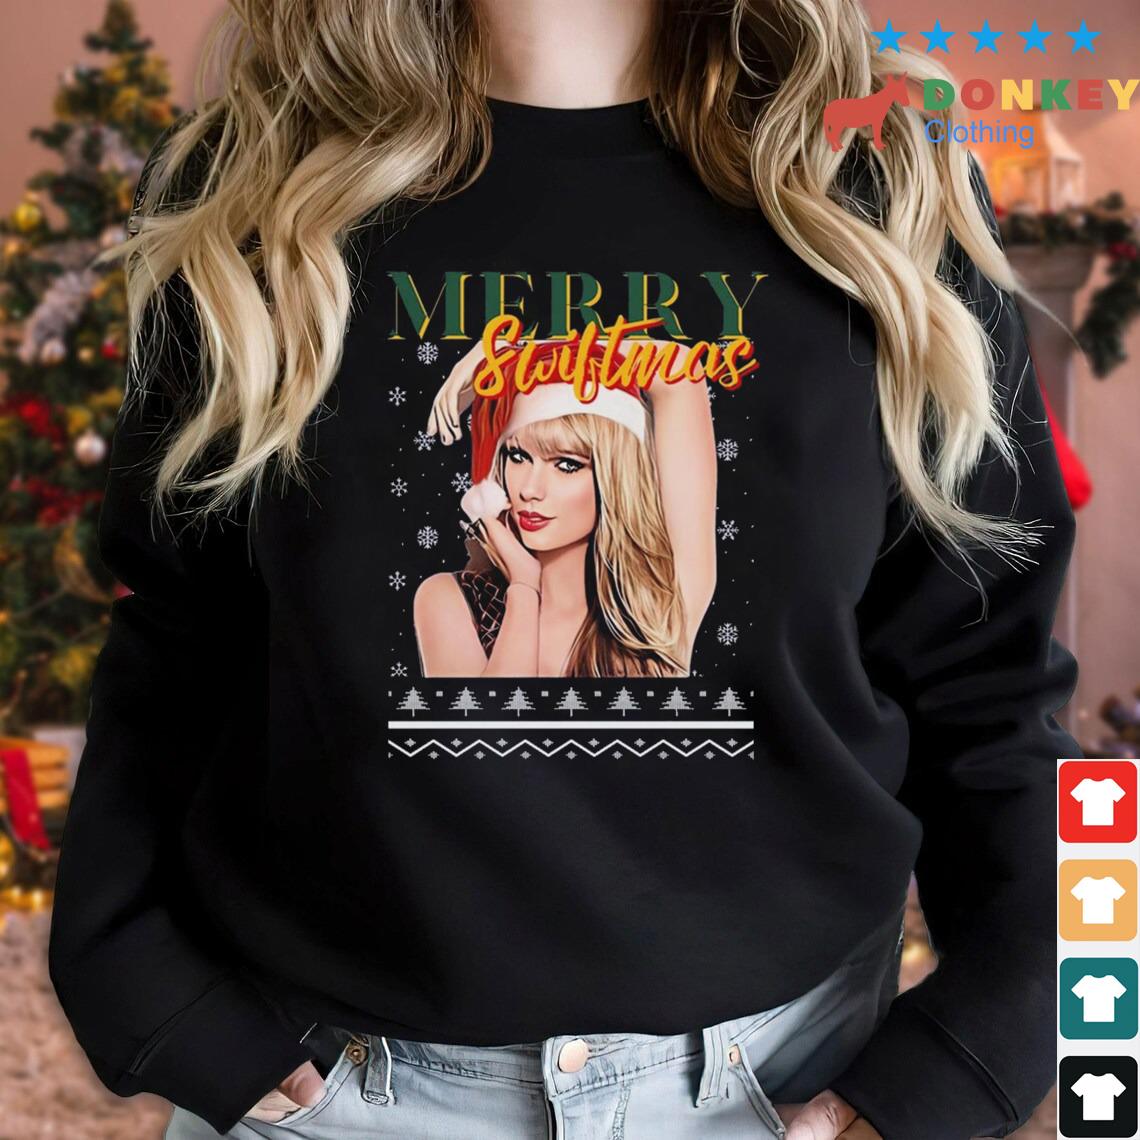 Merry Swiftmas Taylor Swift Jumper Christmas Sweater